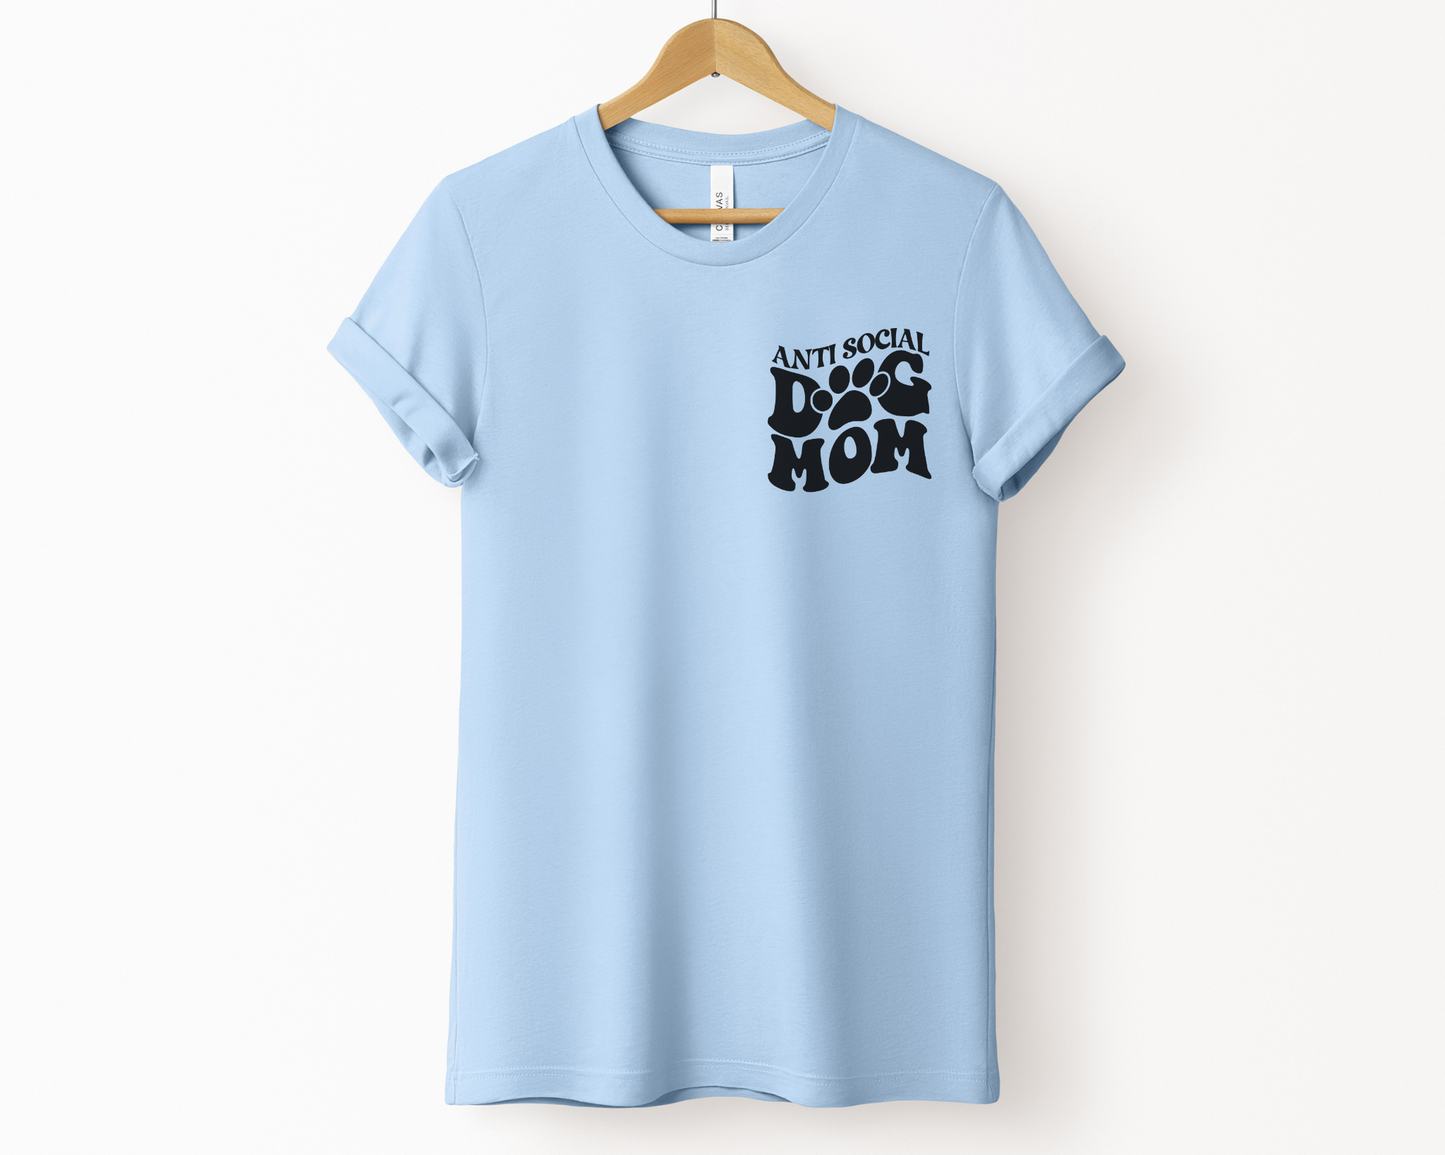 Anti Social Dog Mom Crewneck T-shirt, Baby Blue